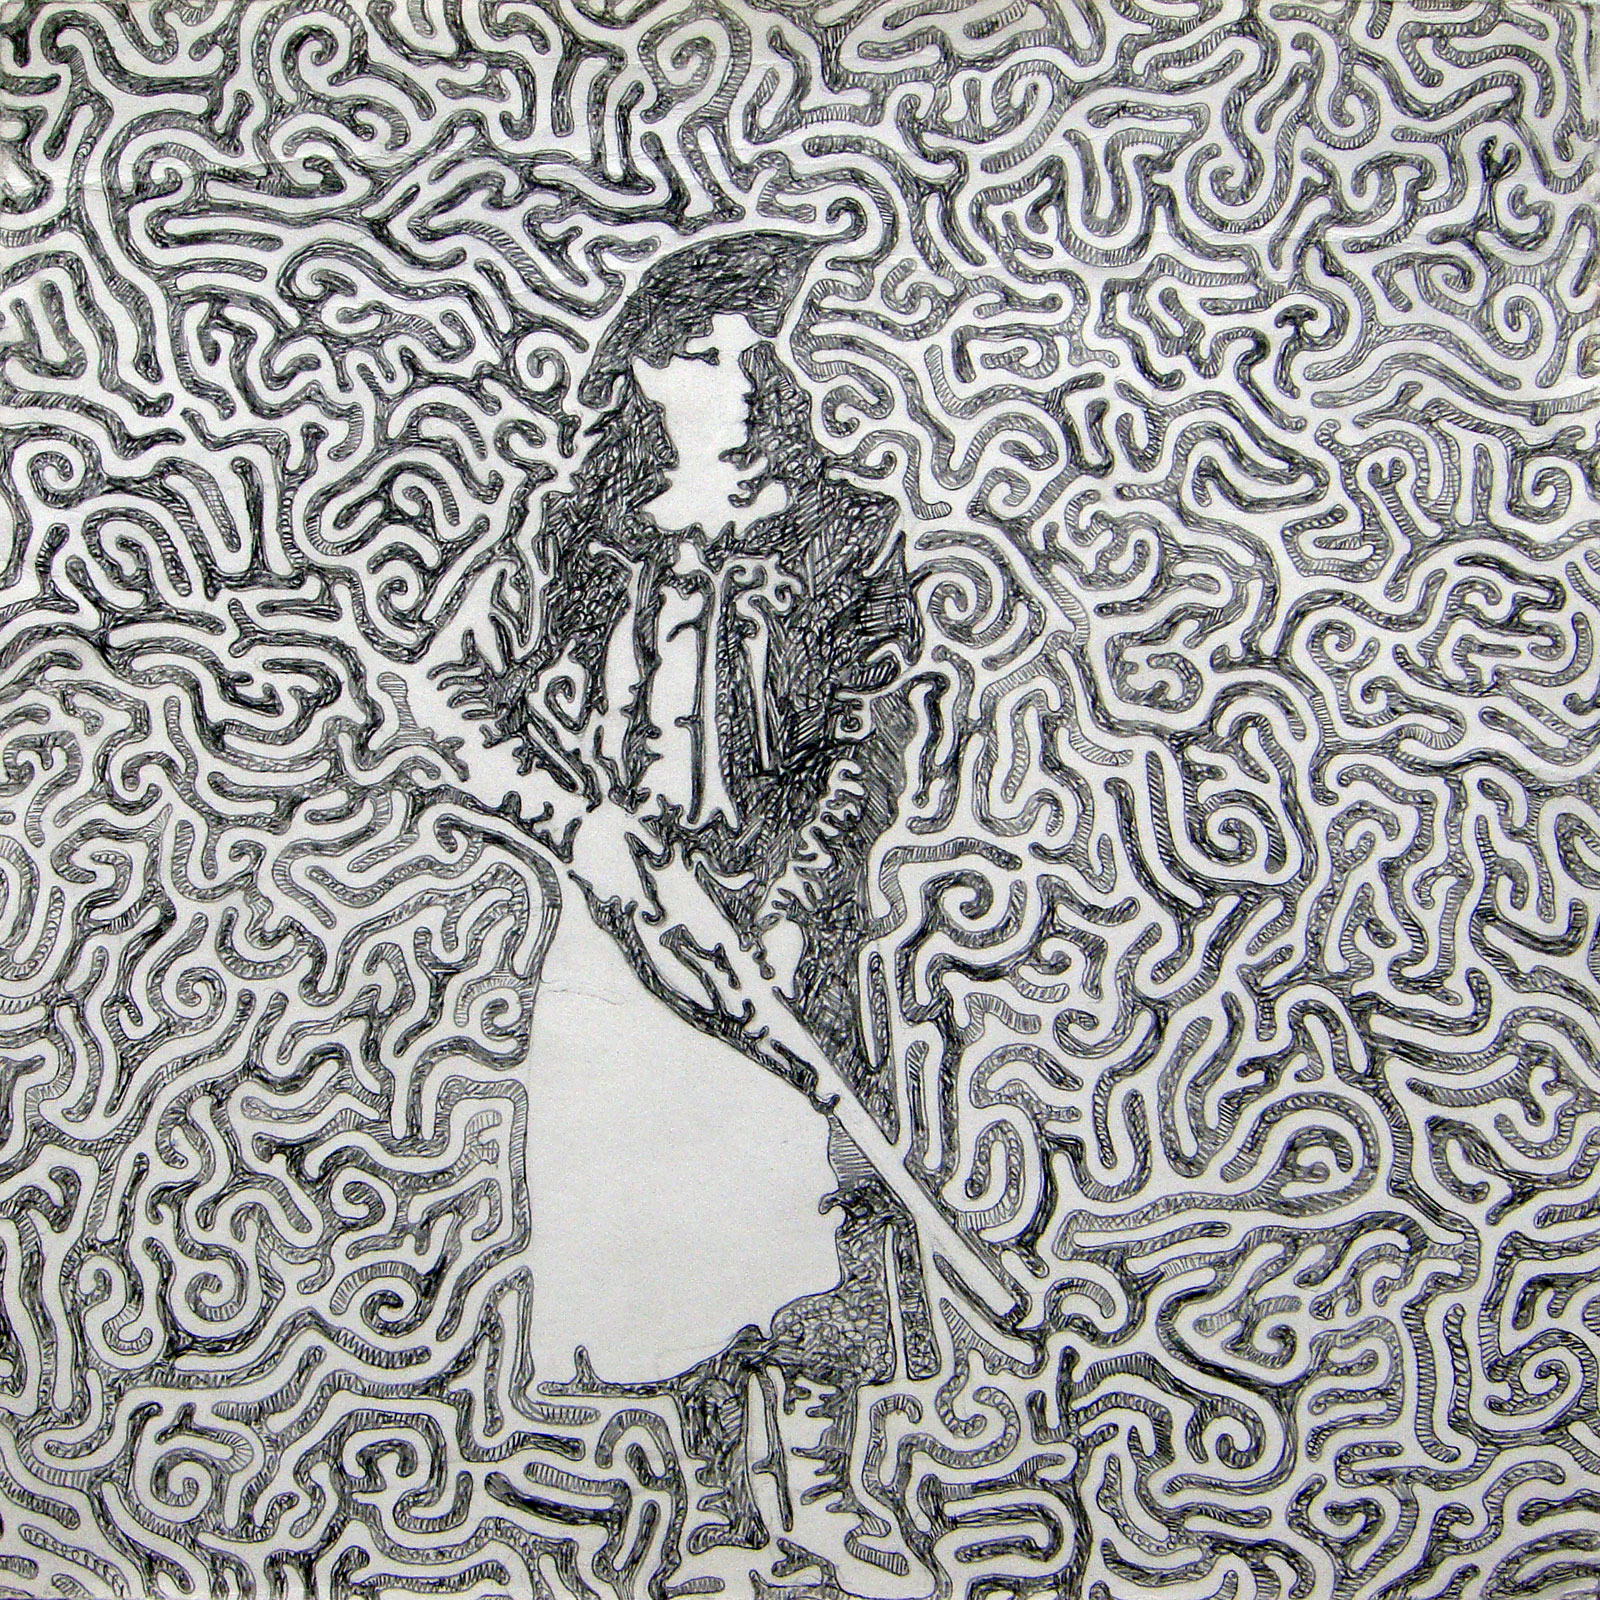  Annie  Pencil on paper  11" x 11” 